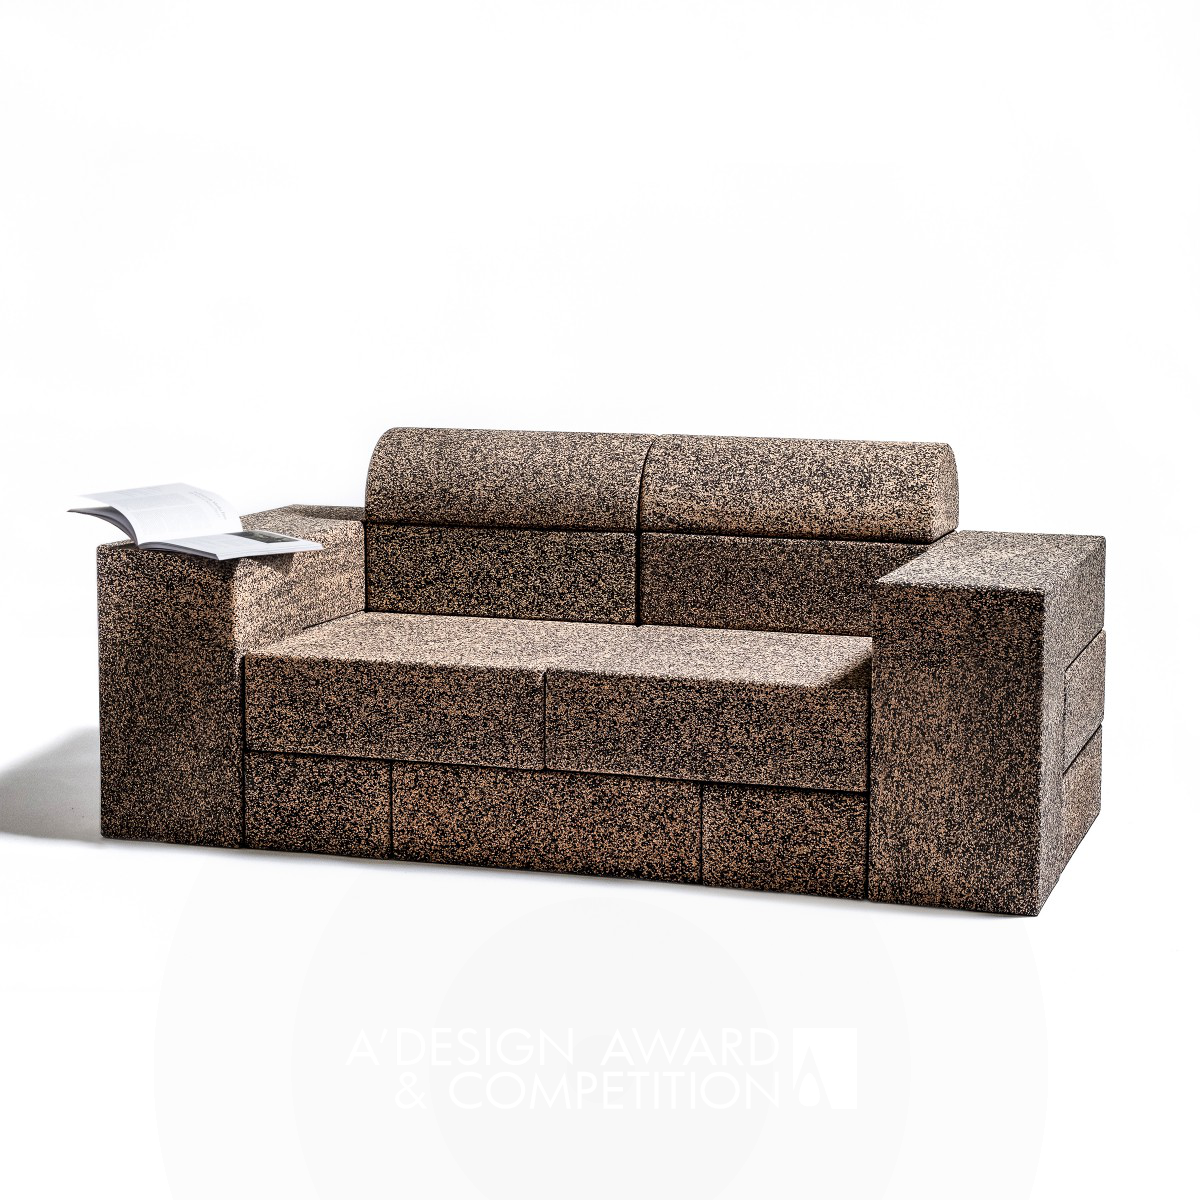 Miguel Arruda wins Silver at the prestigious A' Furniture Design Award with Cork Block  Sofa.